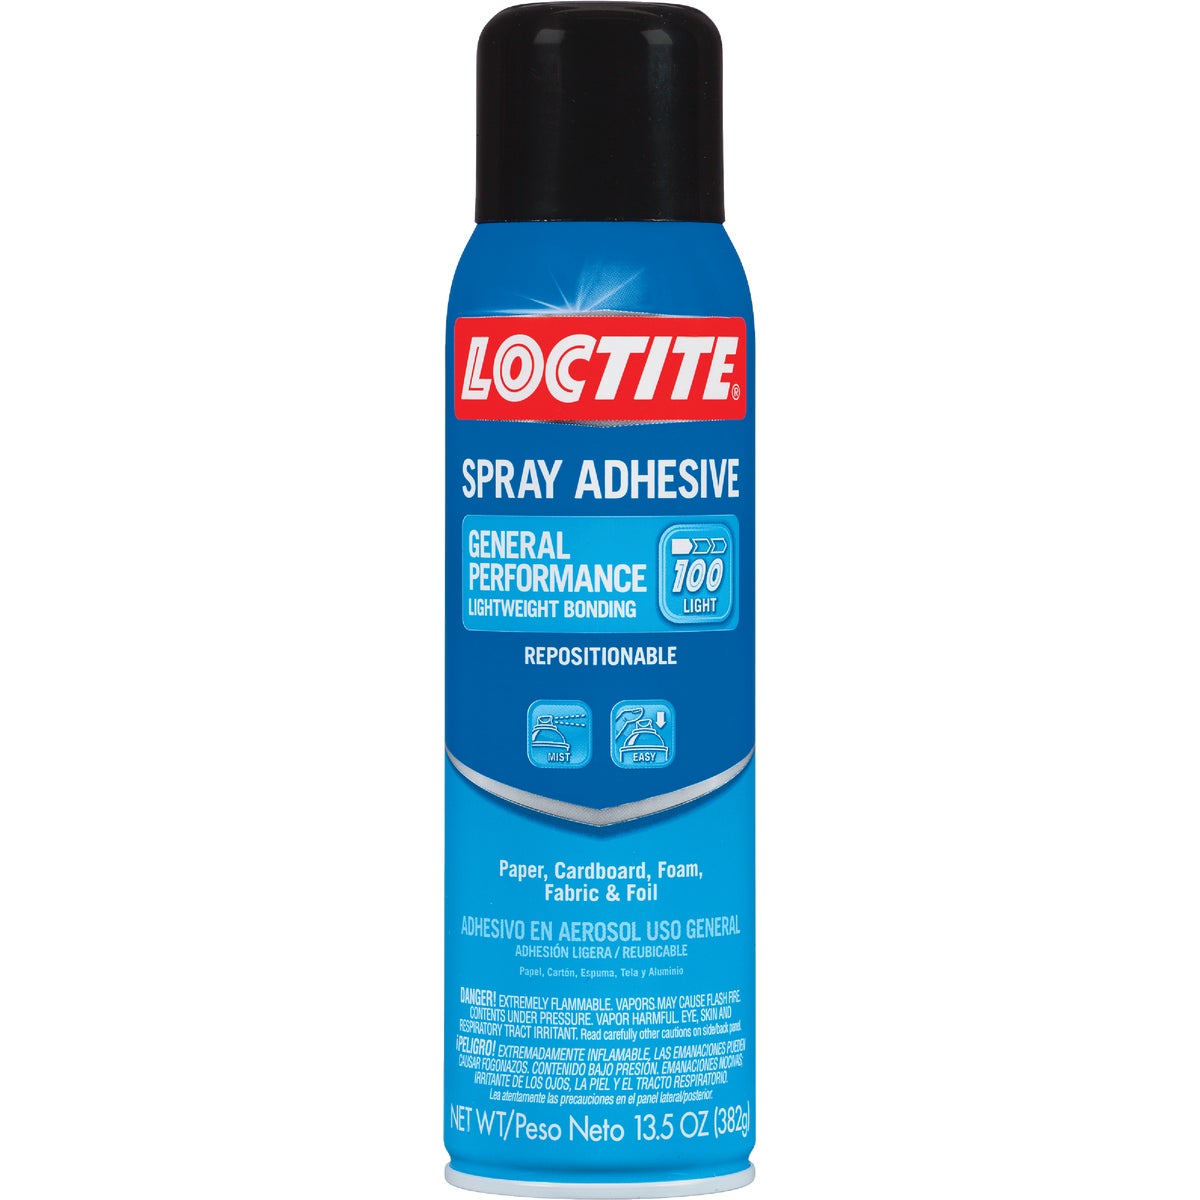 Item 316164, Loctite Spray Adhesive General Performance is a premium quality formulation